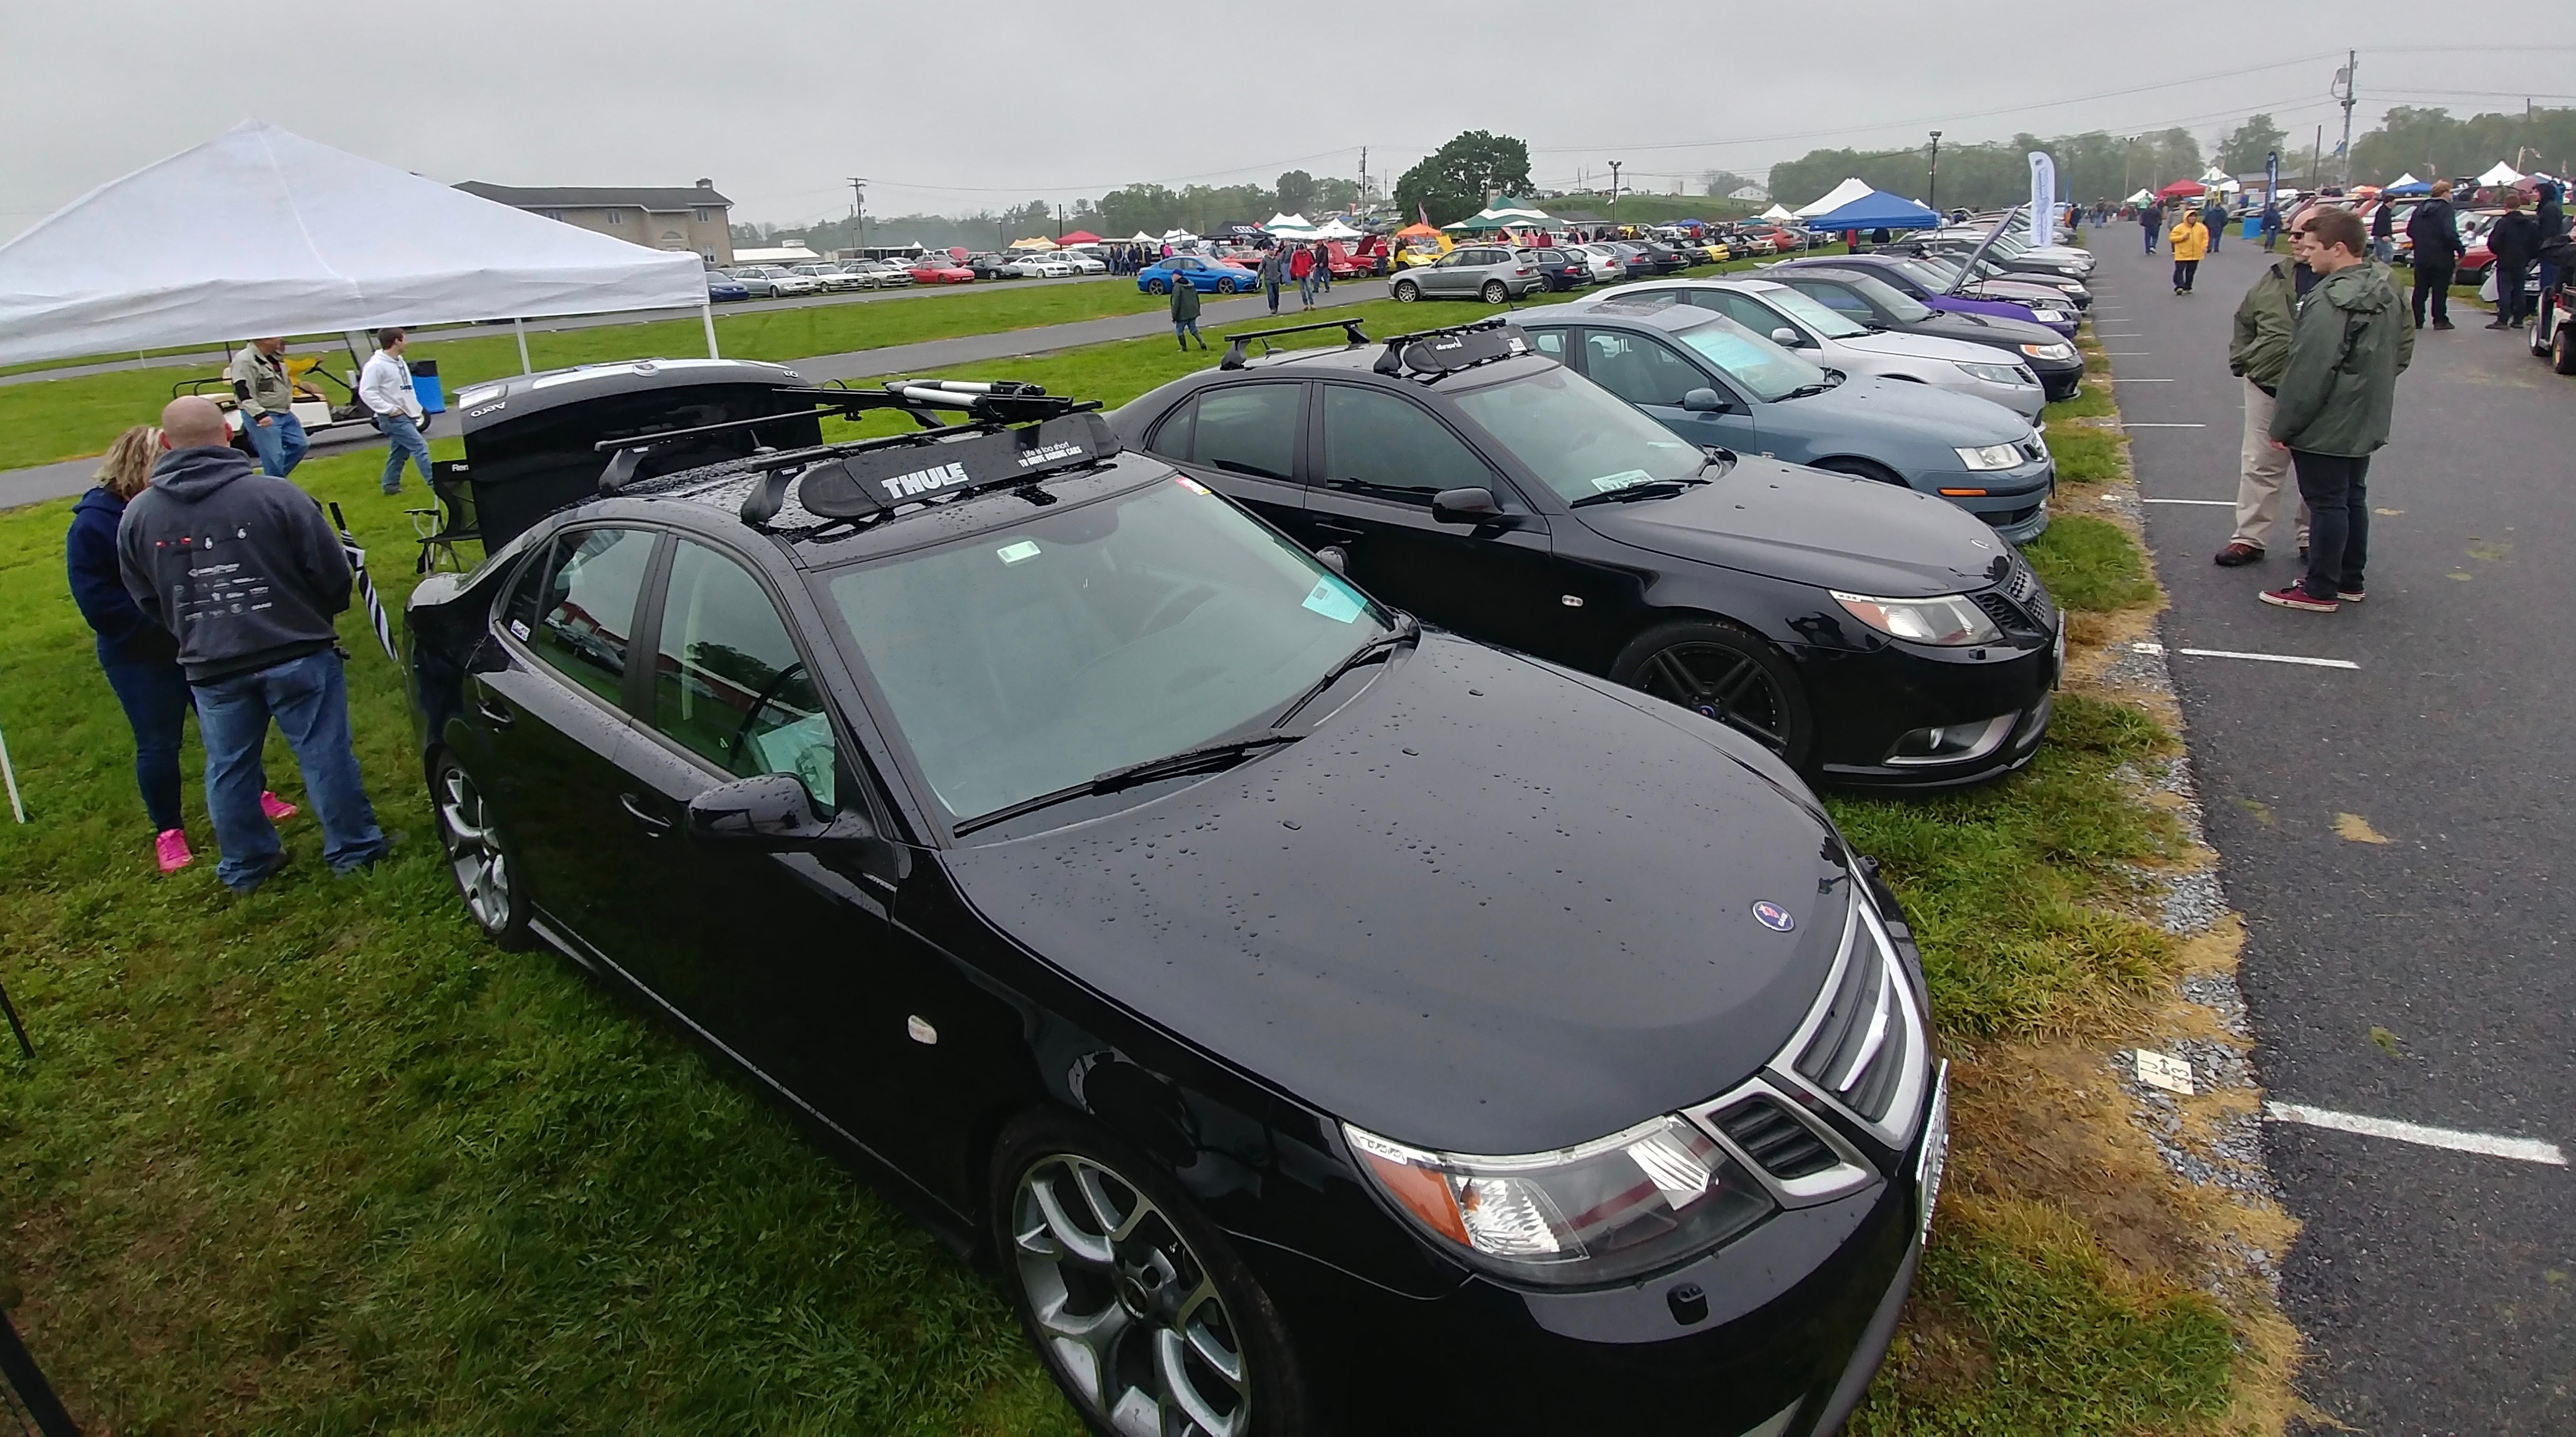 Carlisle Import, Jaguar, Citroen and Saab shine at Carlisle, despite the weather, ClassicCars.com Journal